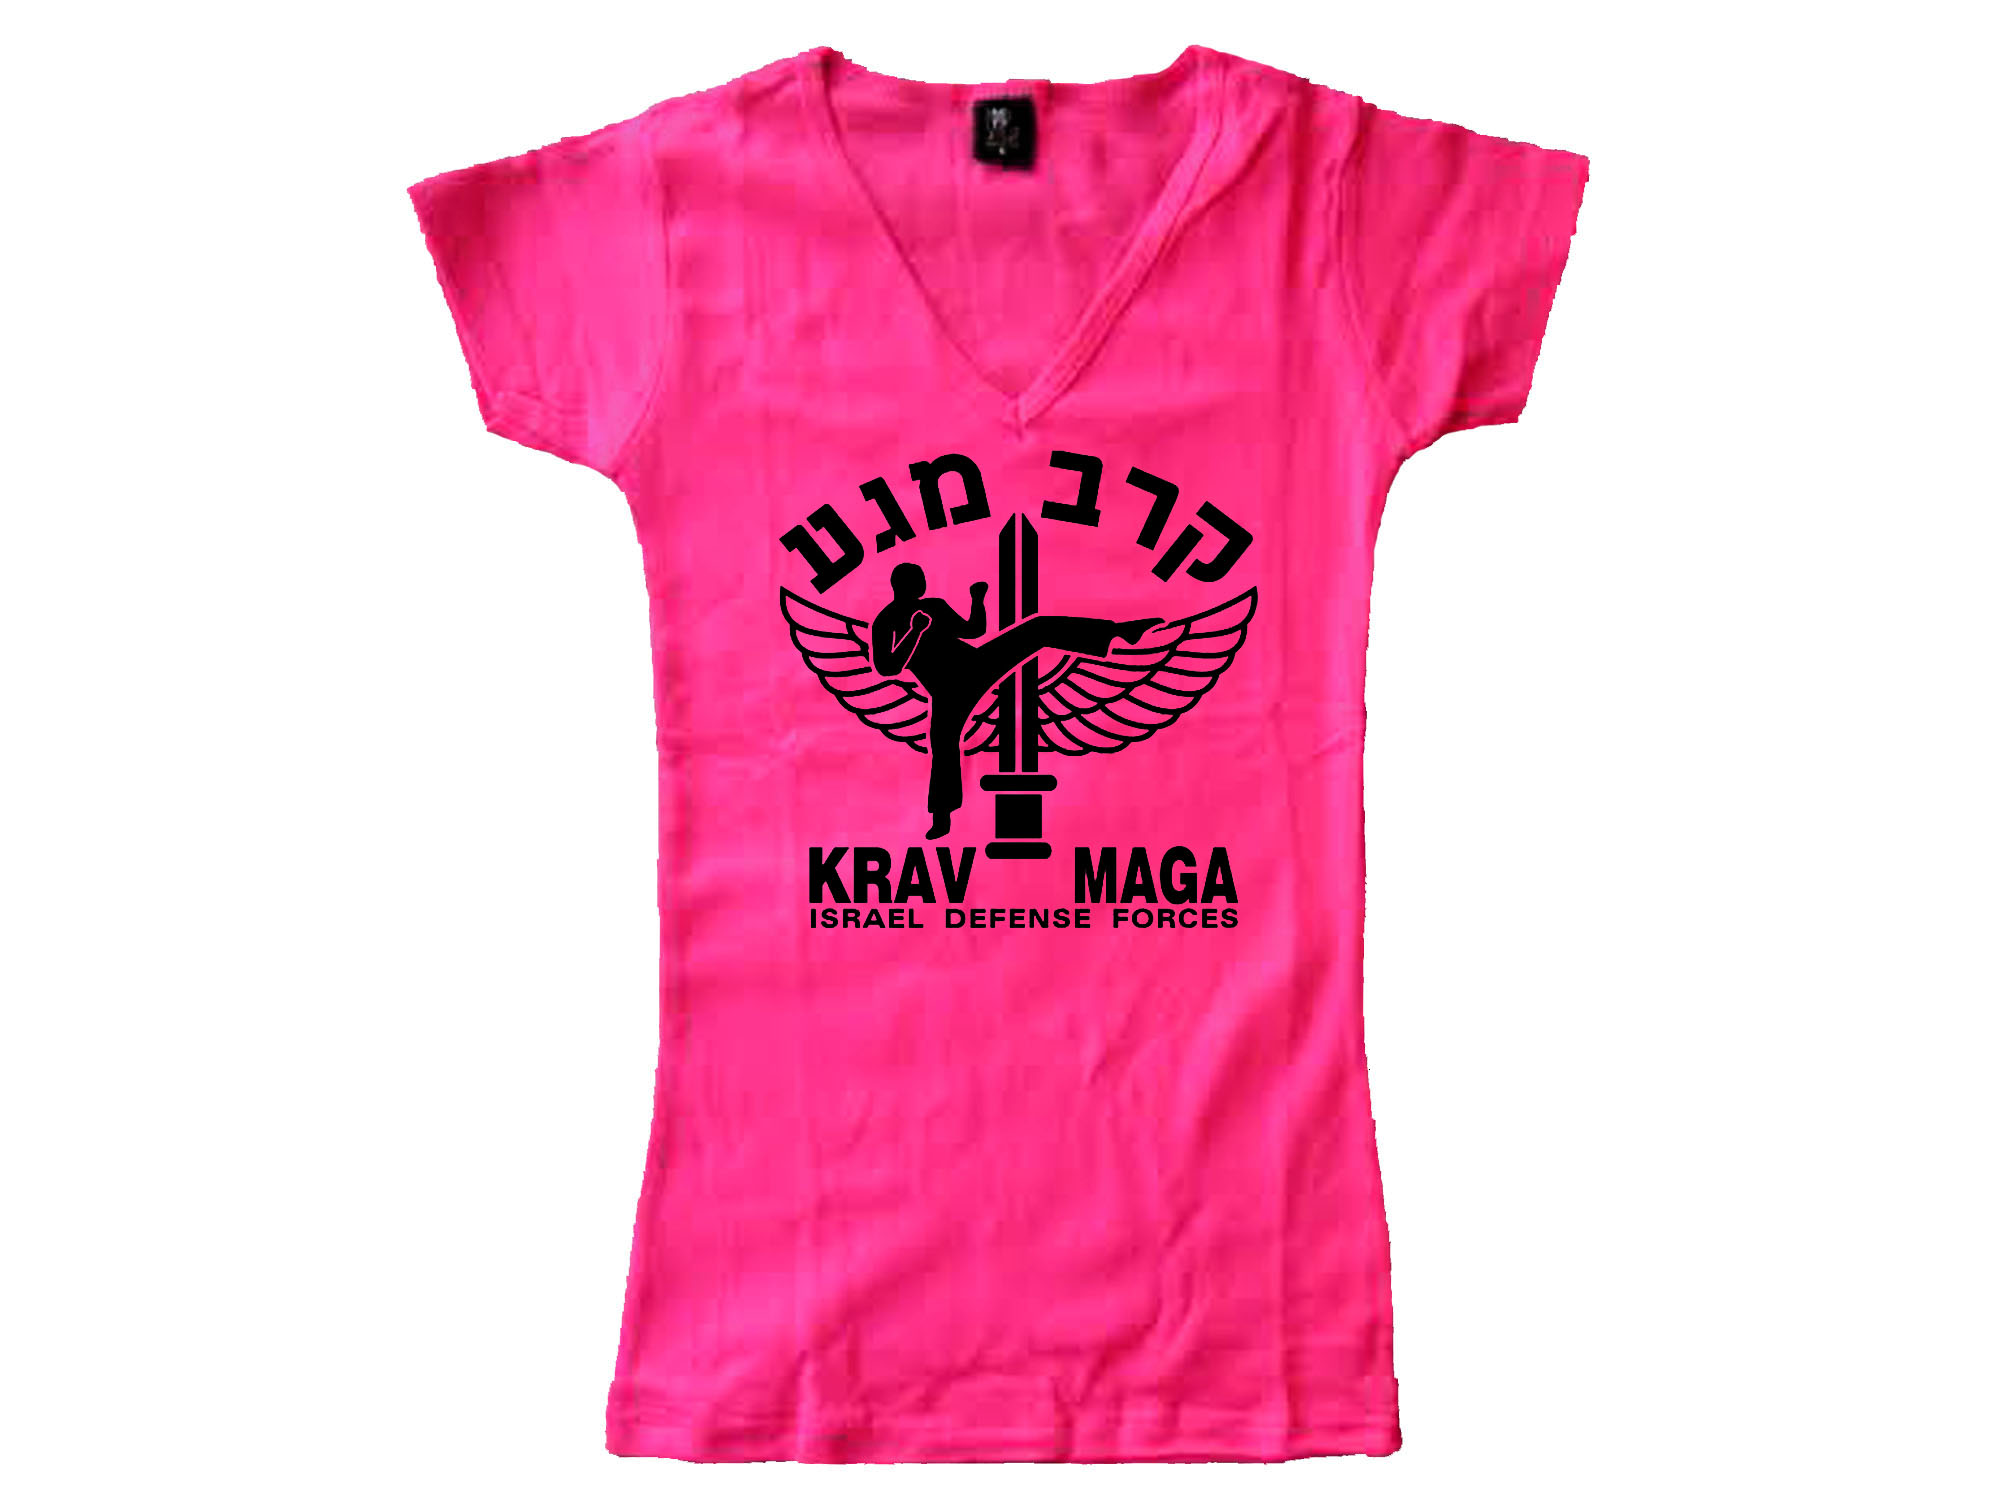 Krav maga emblem women customized pink t-shirt